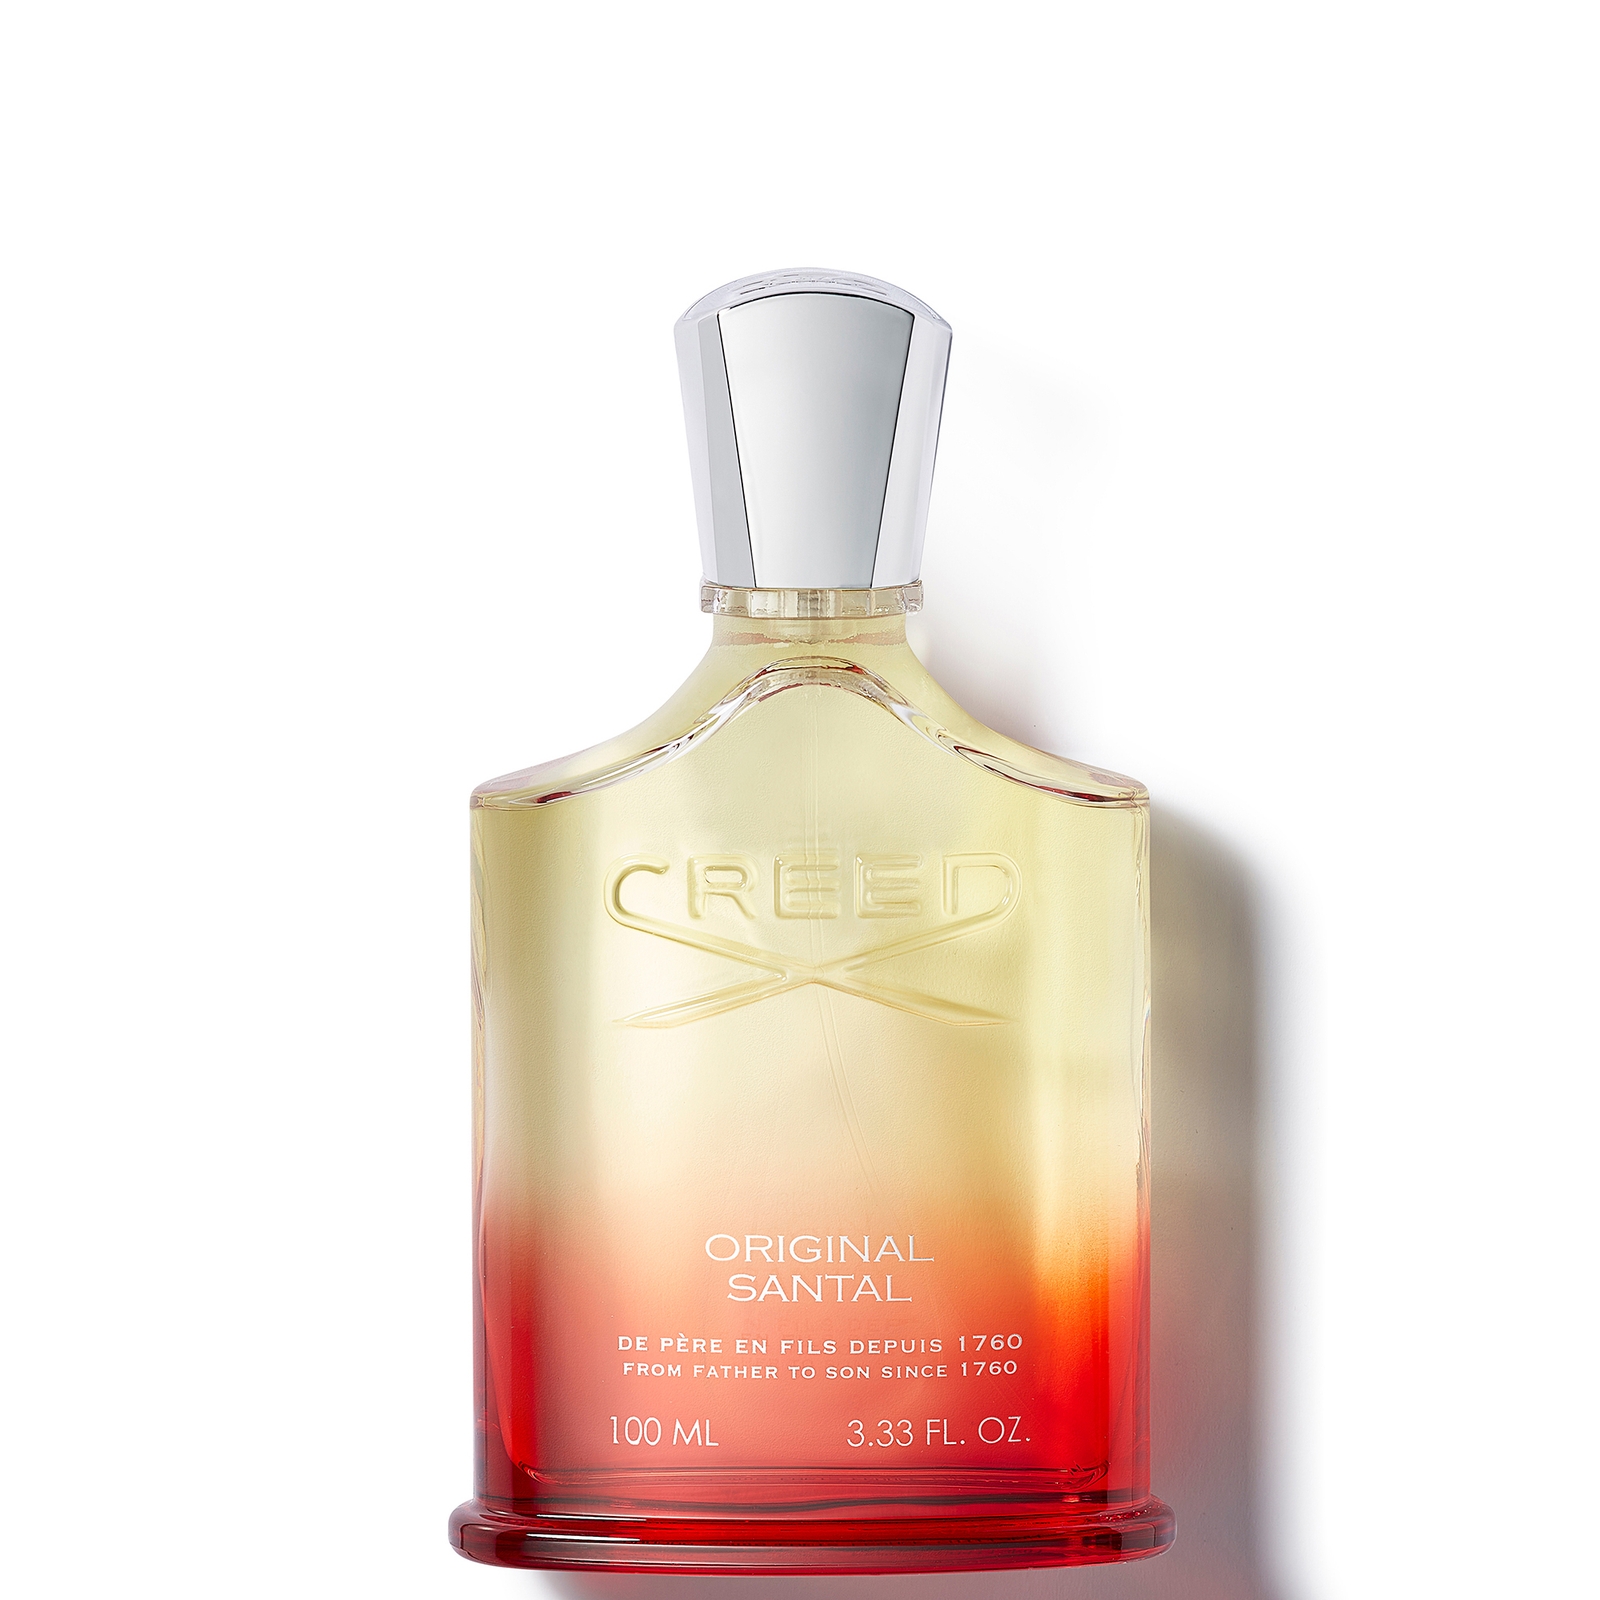 Photos - Women's Fragrance Creed Original Santal Eau de Parfum - 100ml 